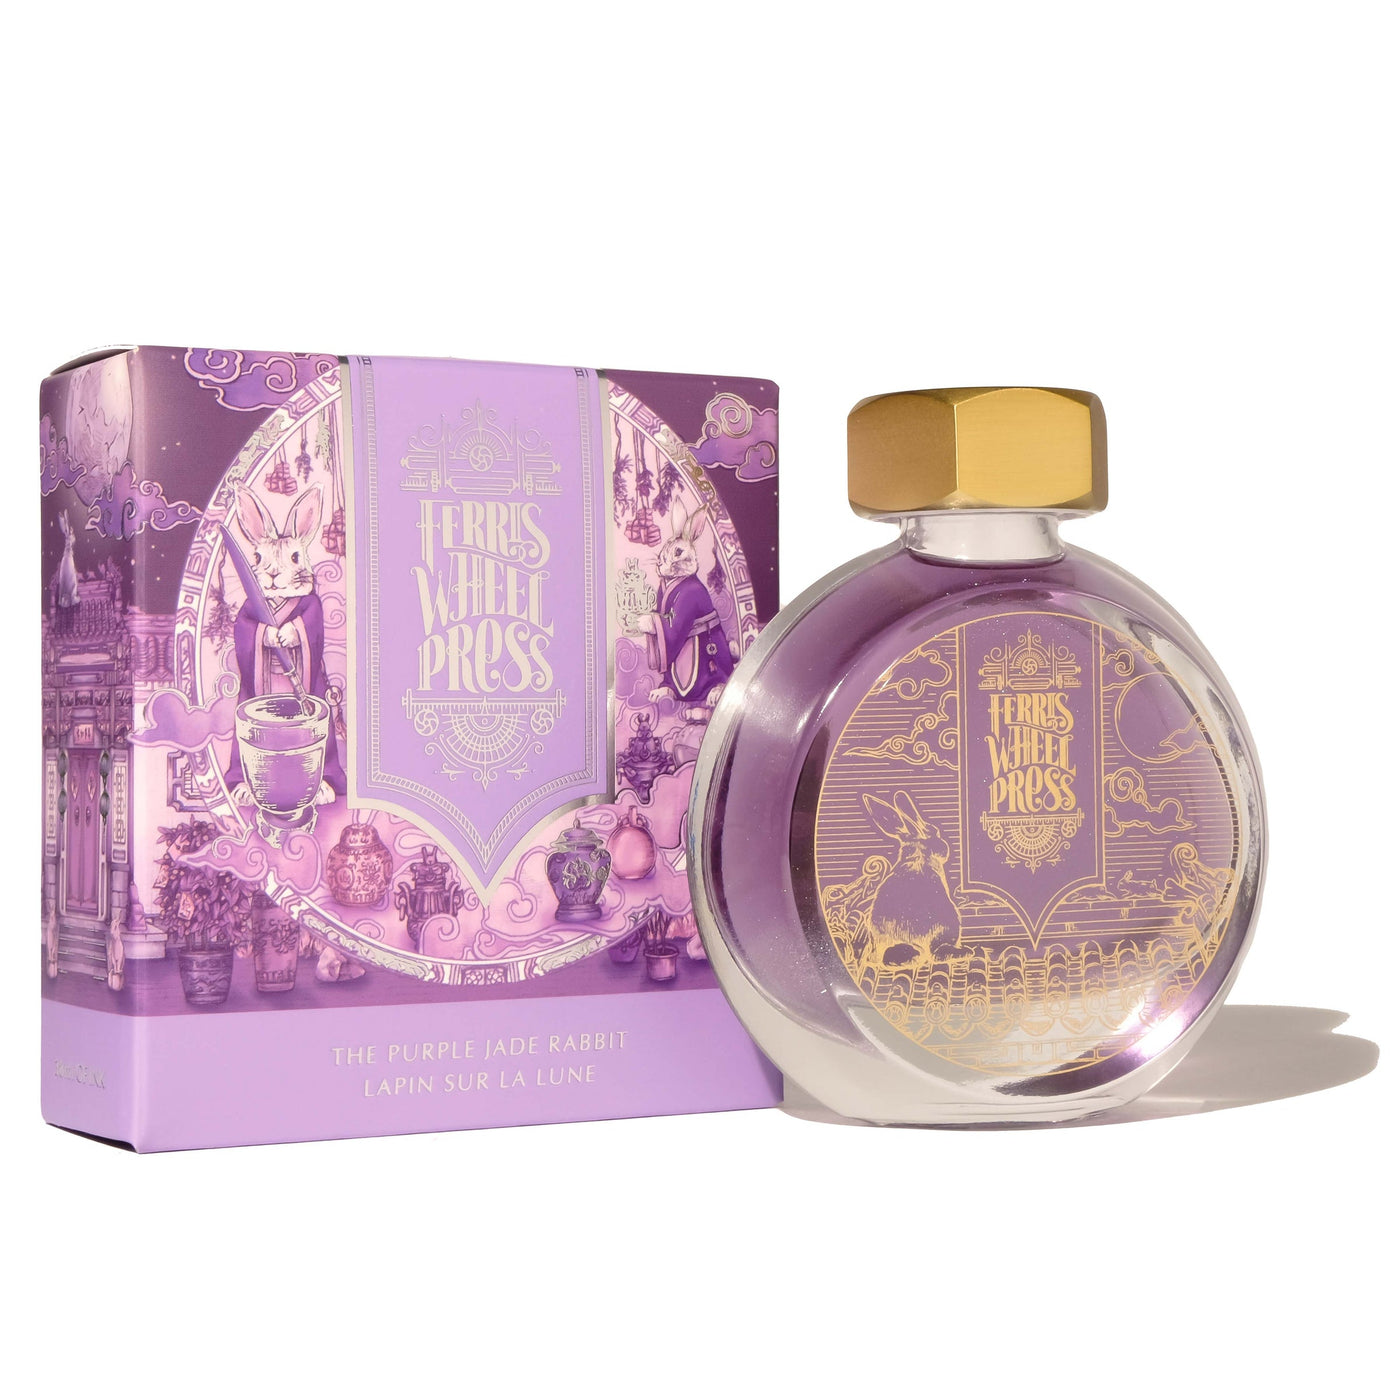 Ferris Wheel Press 38ml bottled Ink - Lunar New Year Purple Jade Rabbit (Special Edition)